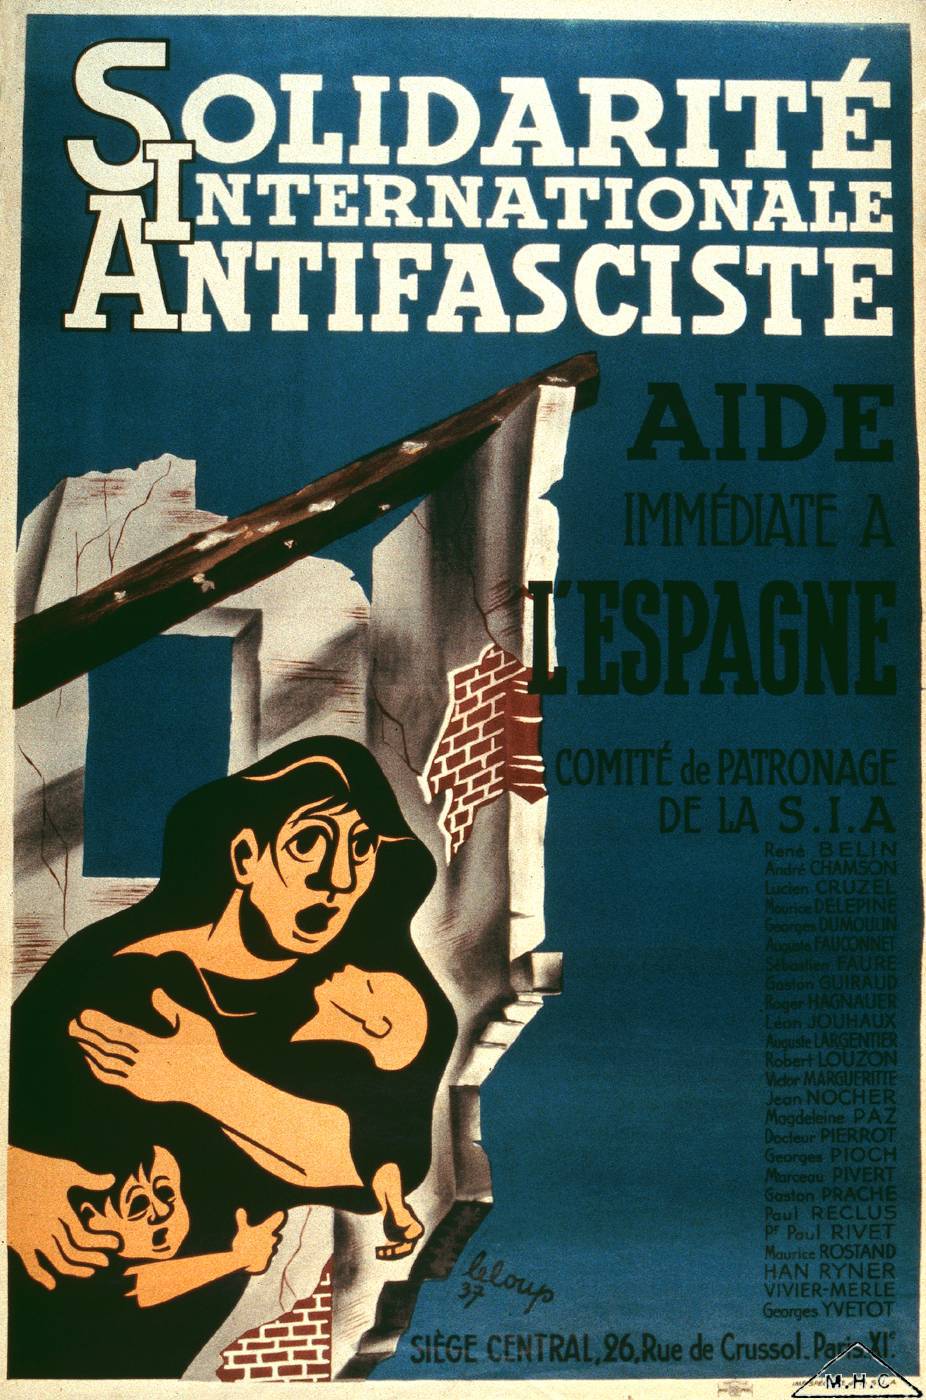 Solidarité internationale antifasciste.